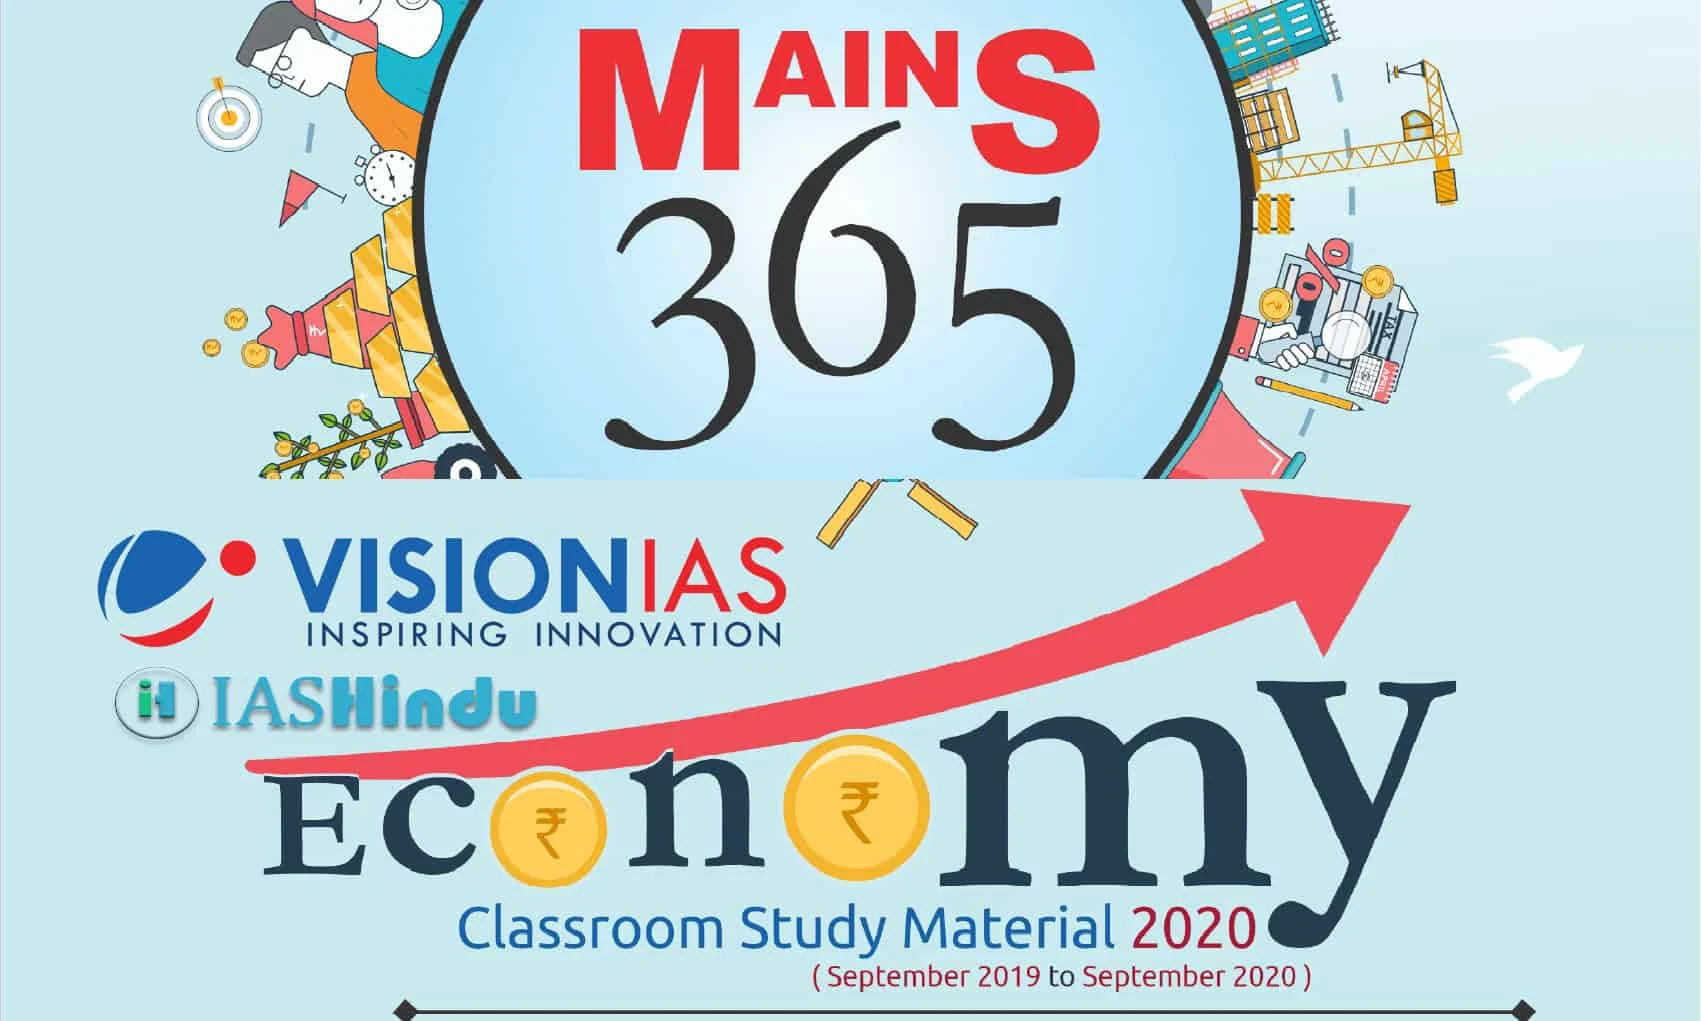 Vision IAS Mains 365 Economy 2020